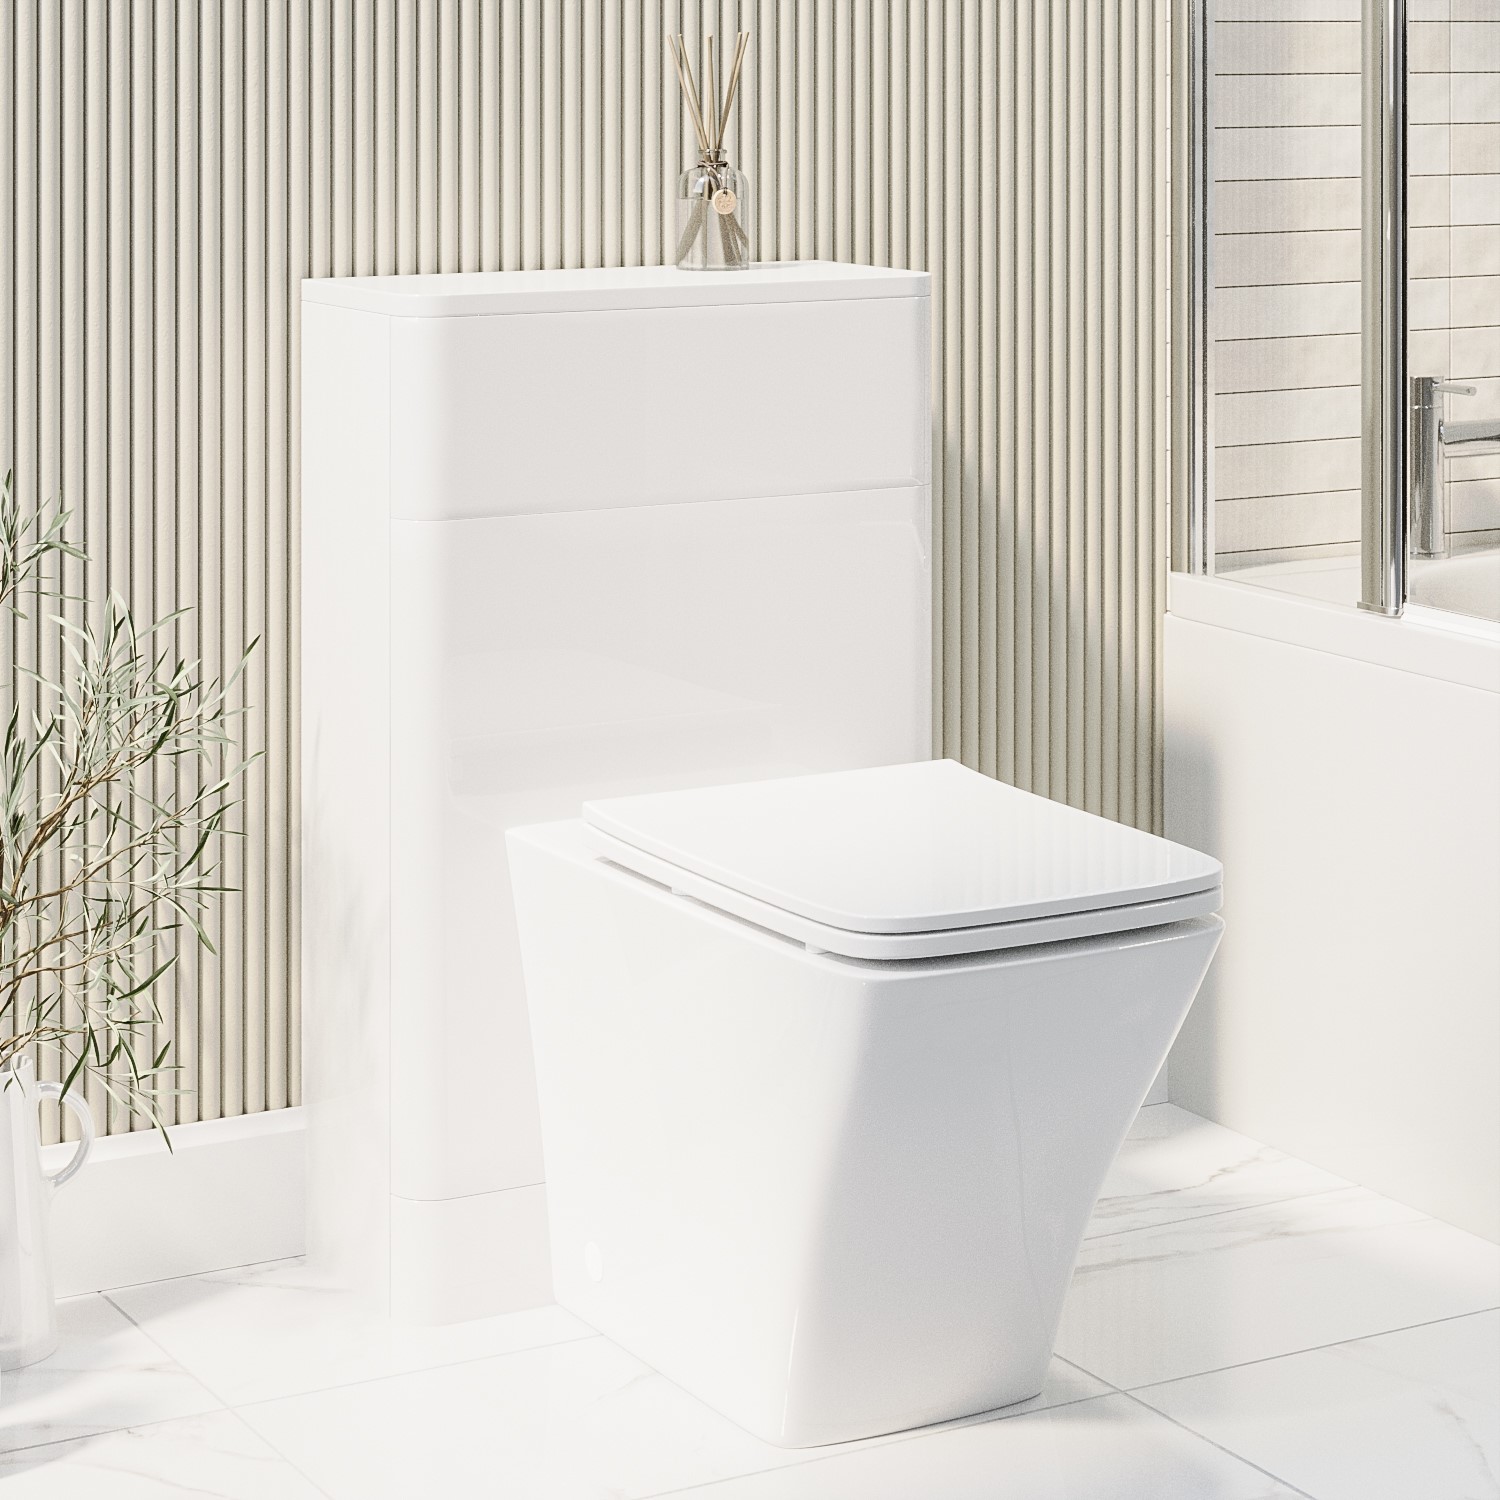 Alpine DUO Gloss White 500mm x 220mm WC Unit Toilet Surround OnlyRRP £219 